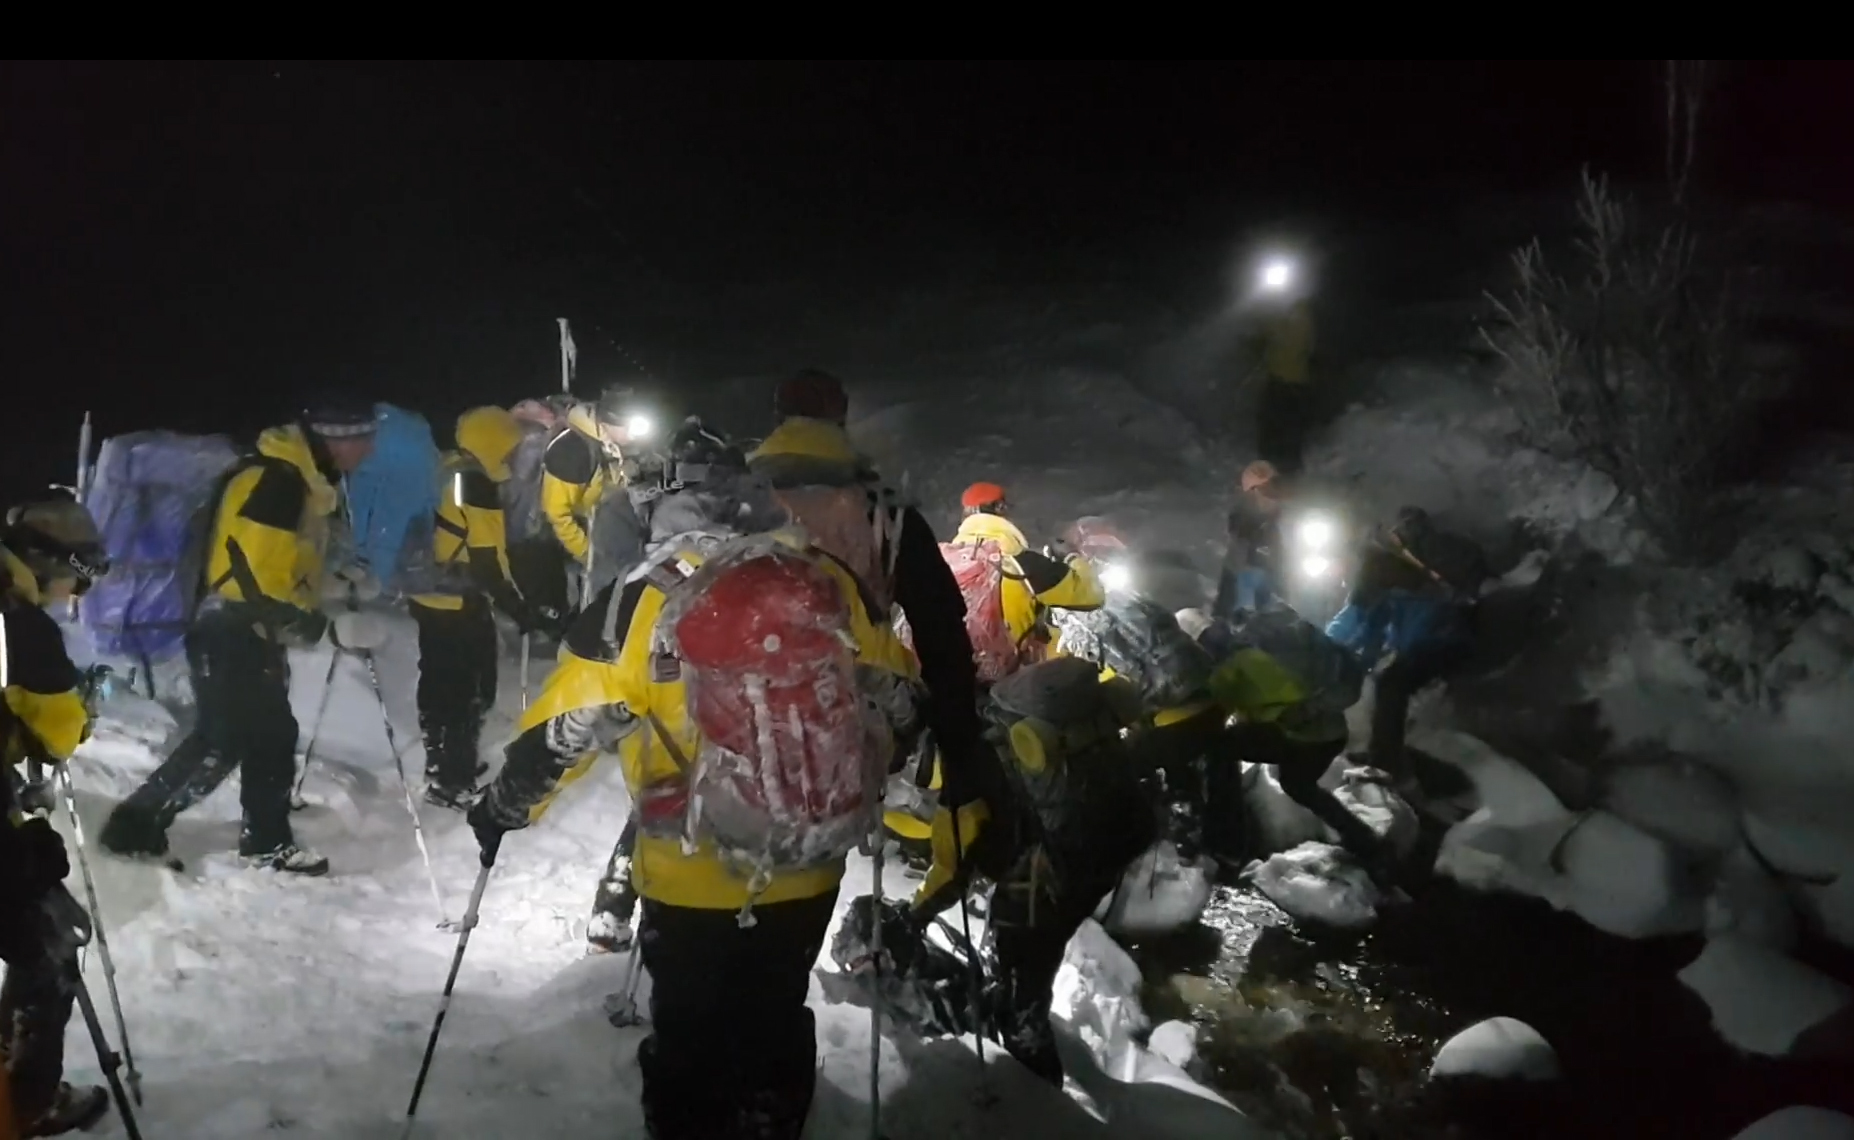 Cairngorm Mountain Rescue Team